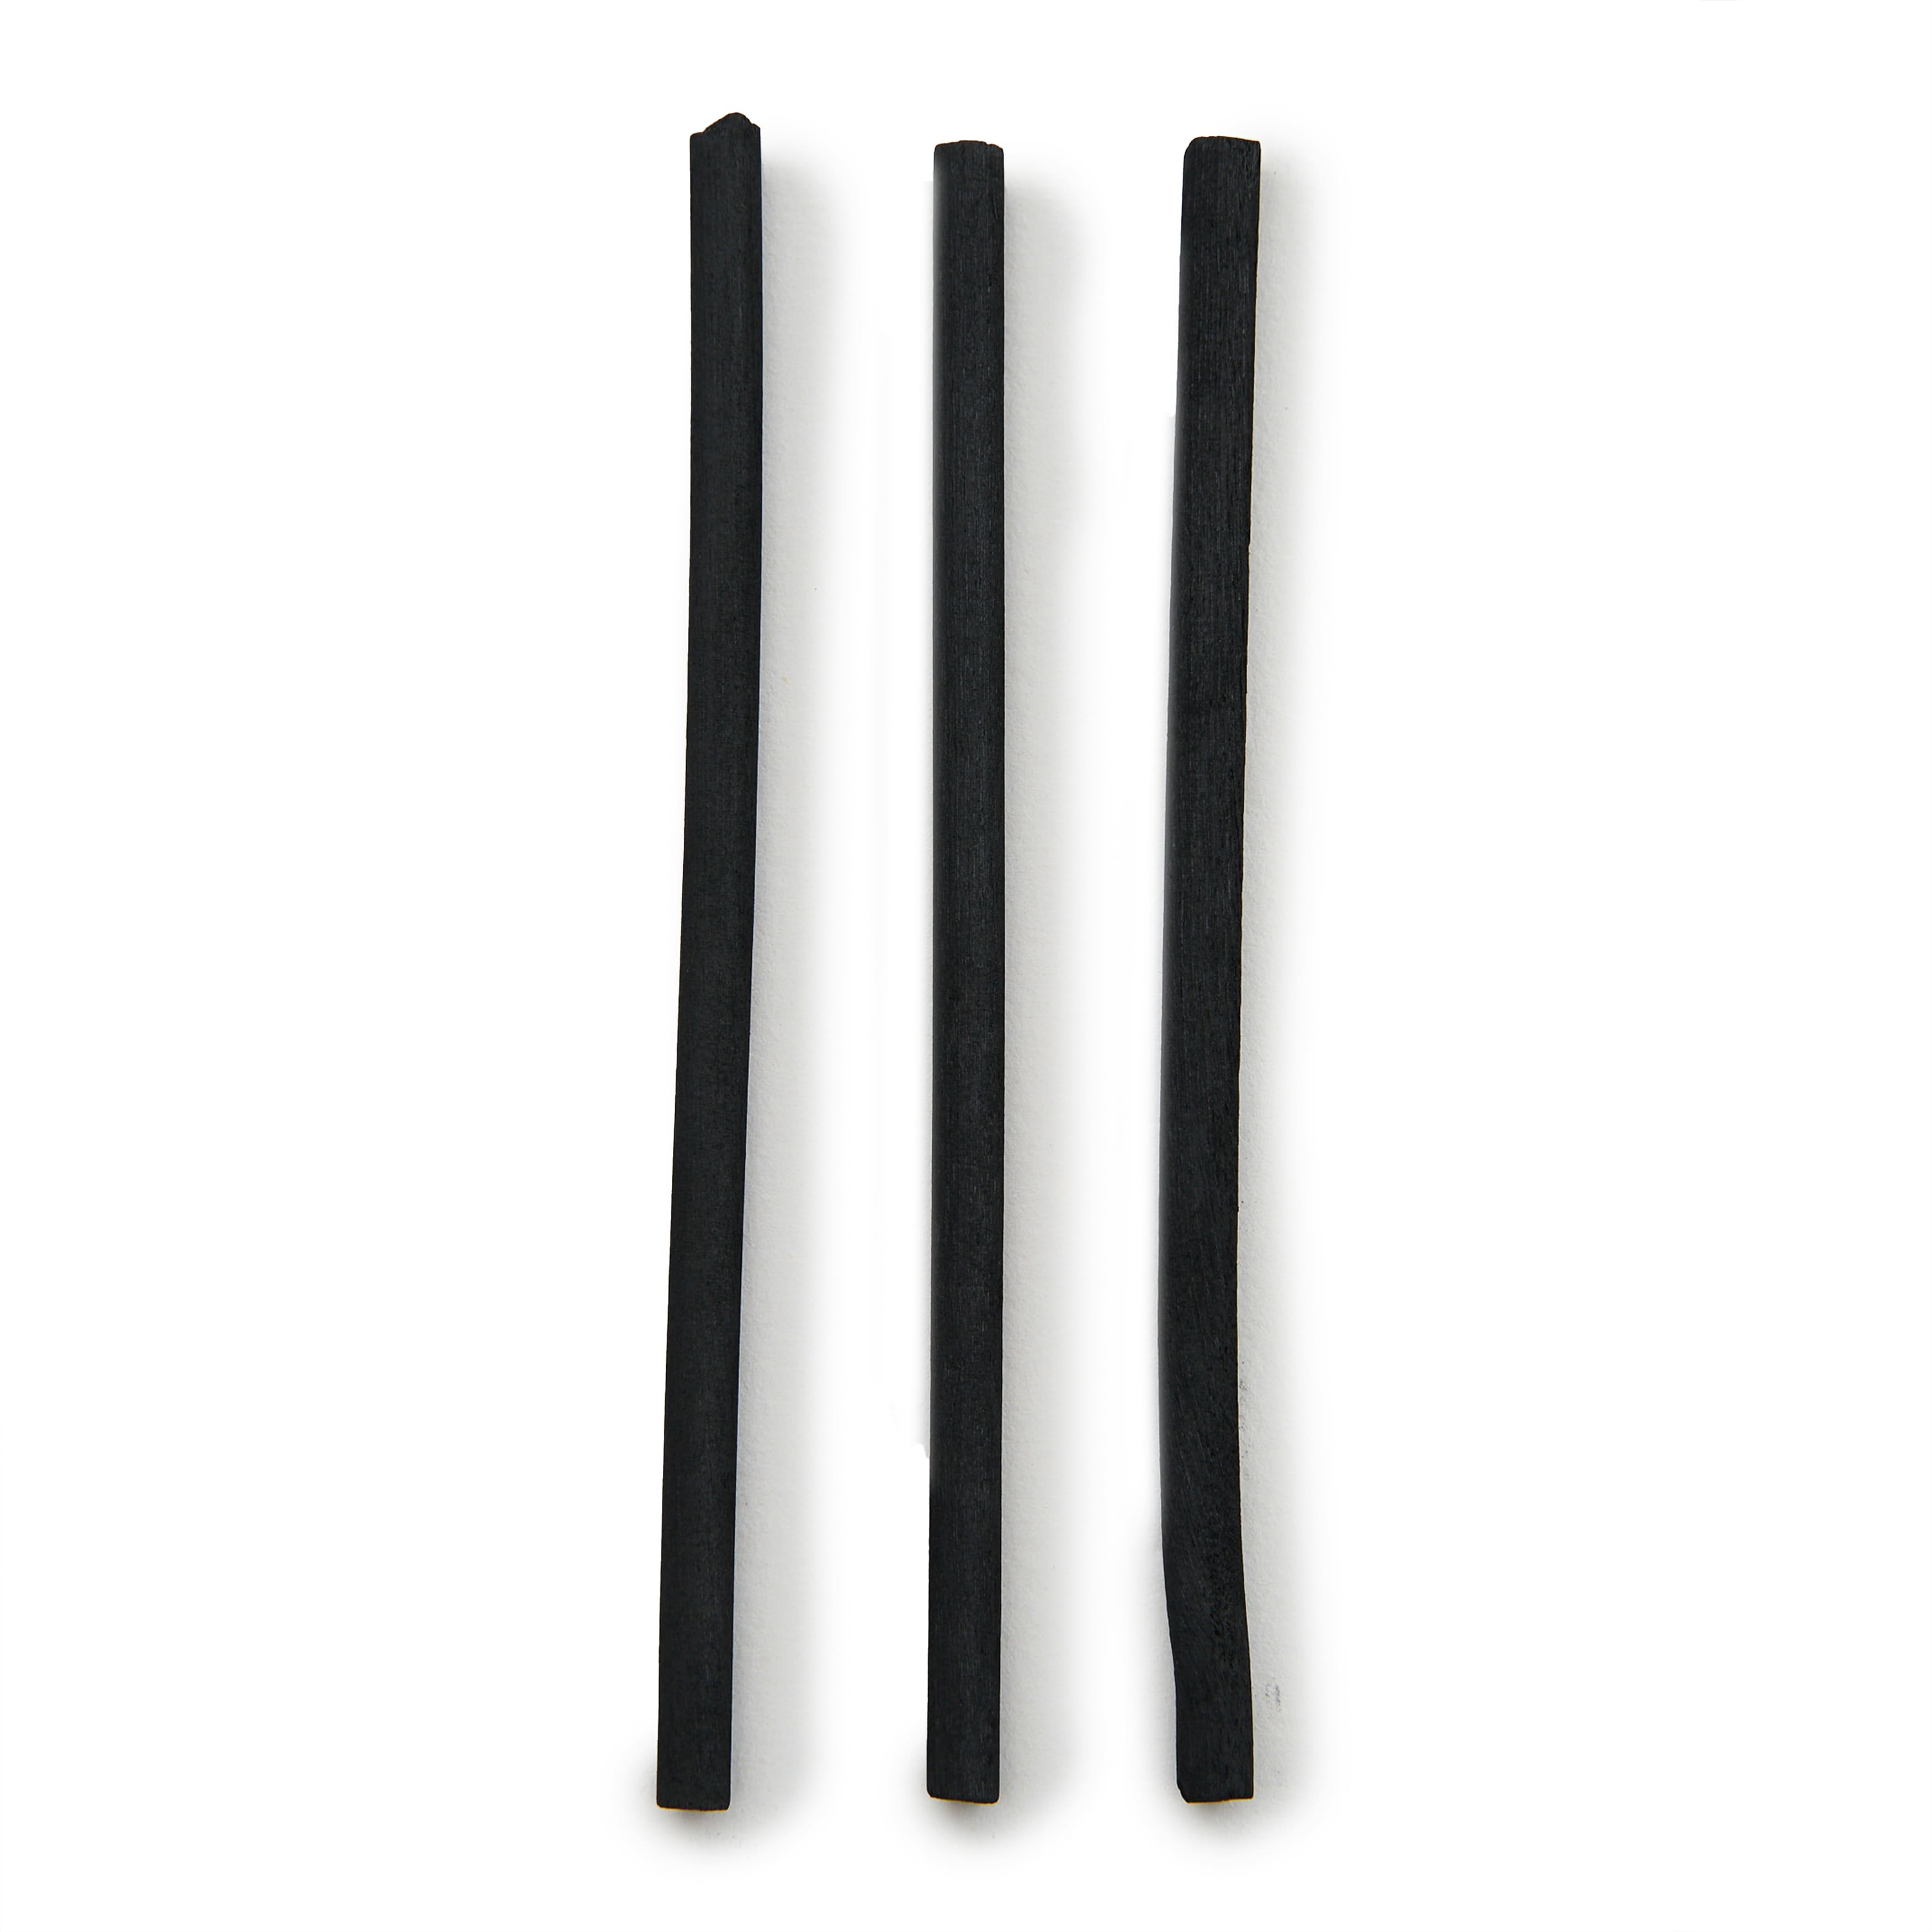 12 Packs: 3 ct. (36 total) Vine Medium Charcoal Sticks by Artist&#x2019;s Loft&#x2122;